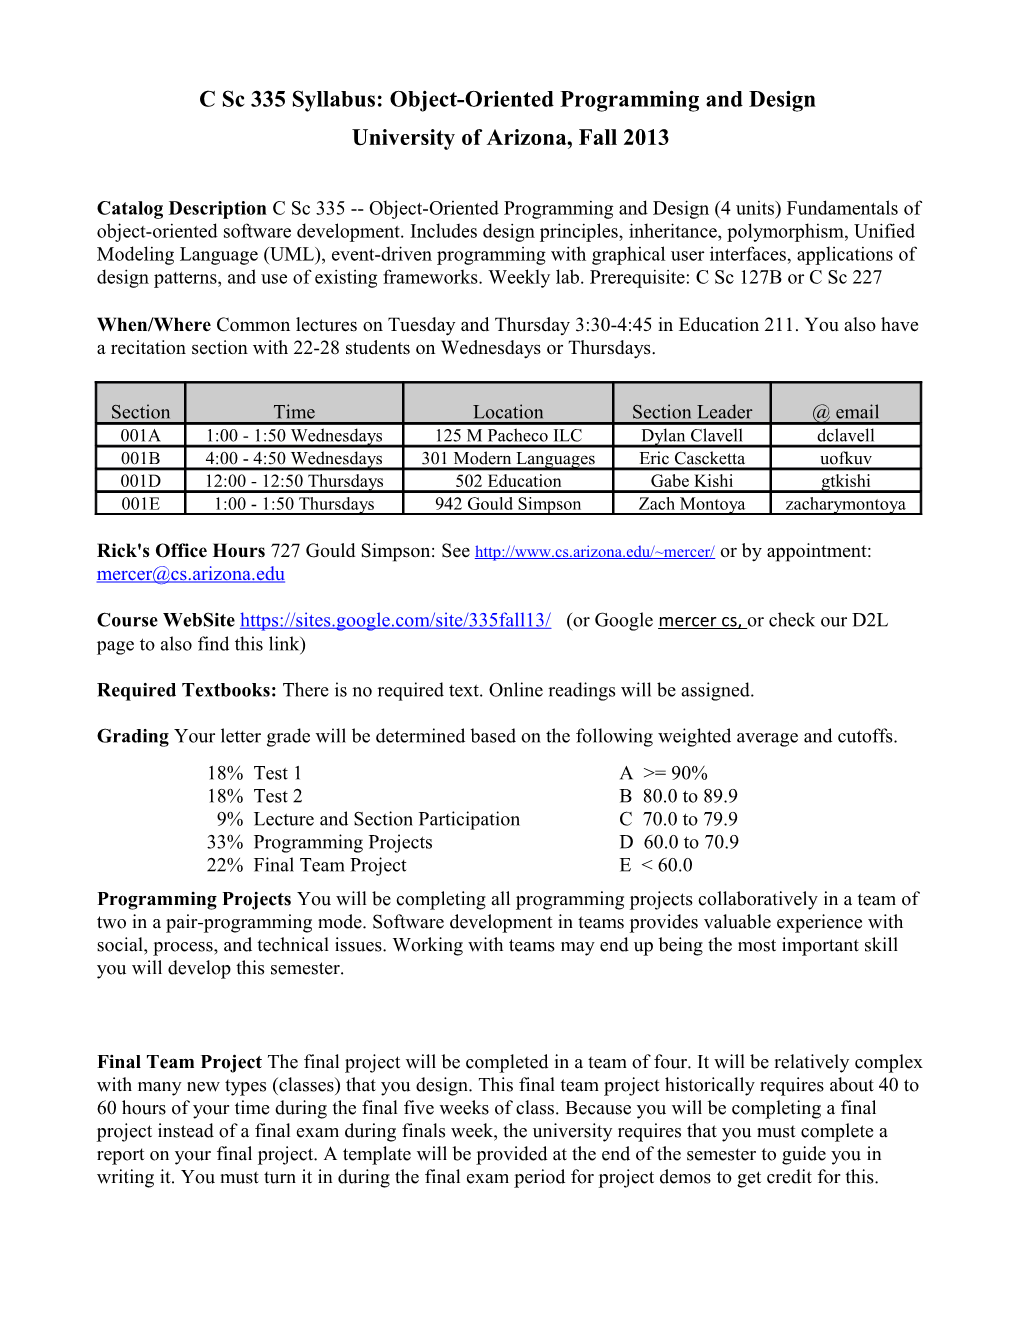 C Sc 335 Syllabus:Object-Oriented Programming and Design University of Arizona,Fall2013